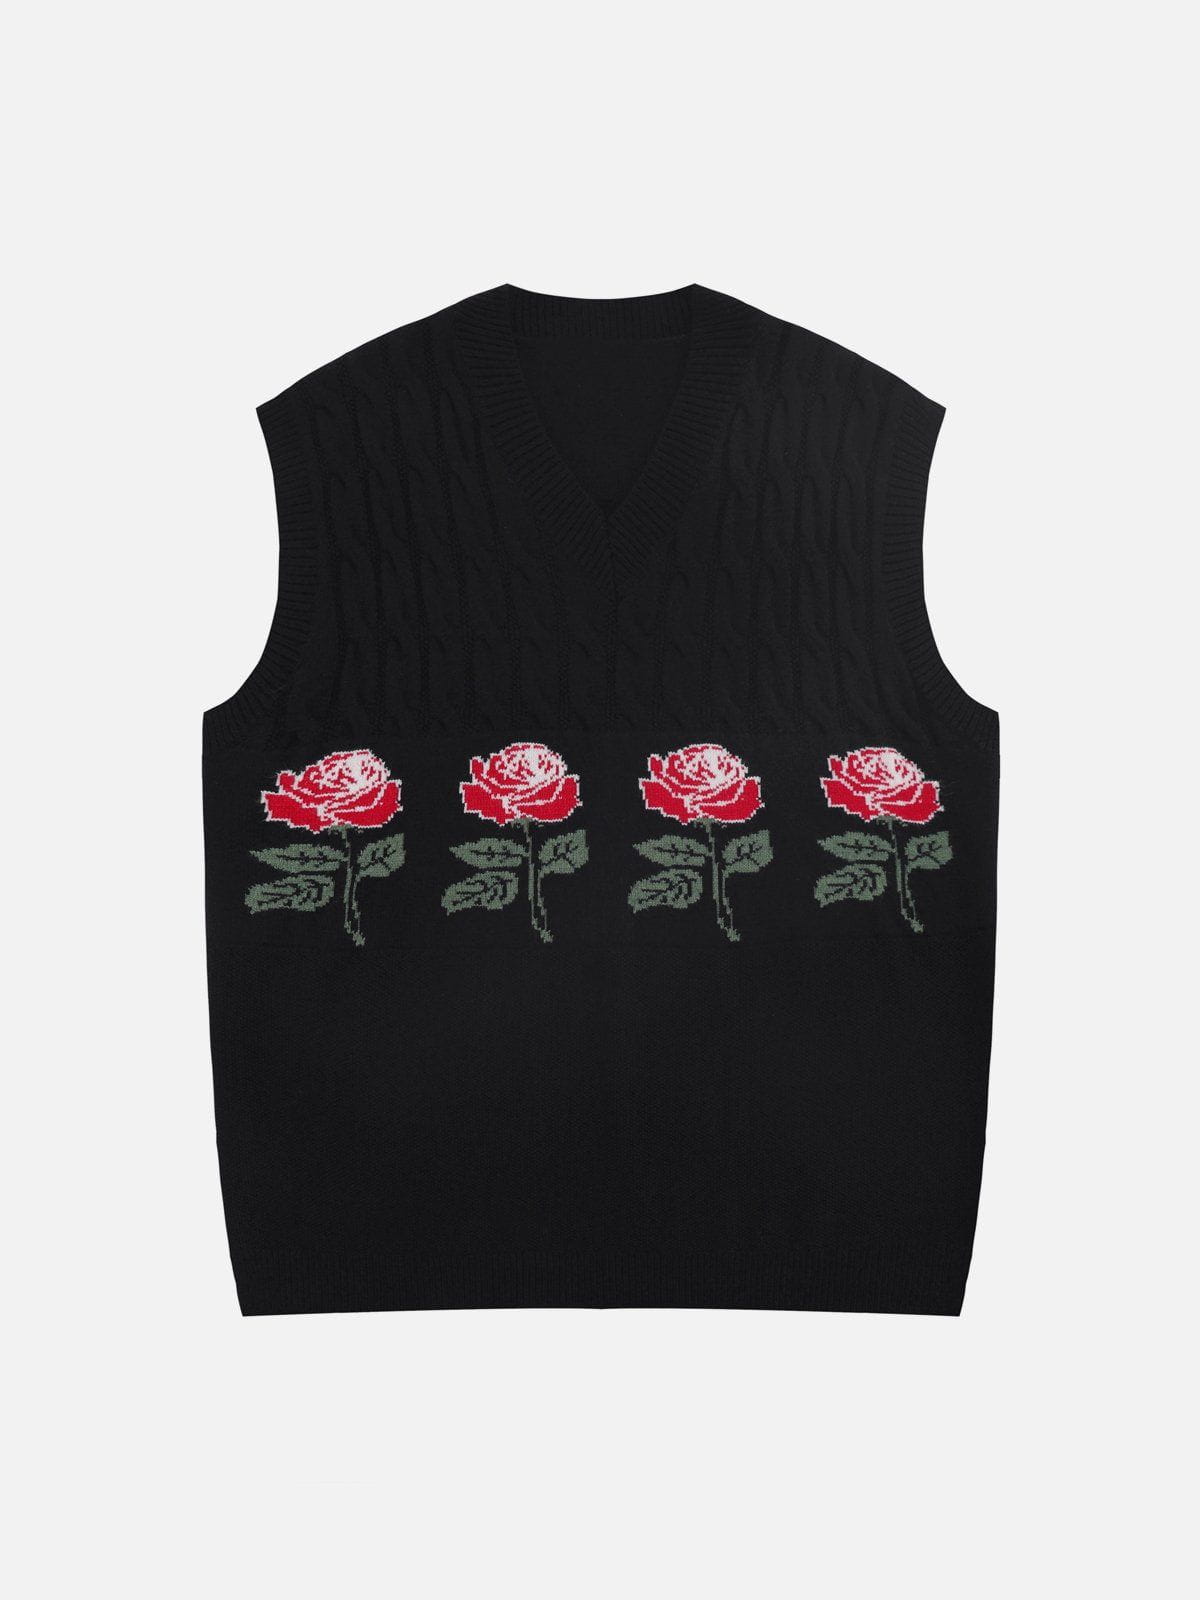 Majesda® - Rose Pattern Sweater Vest outfit ideas streetwear fashion